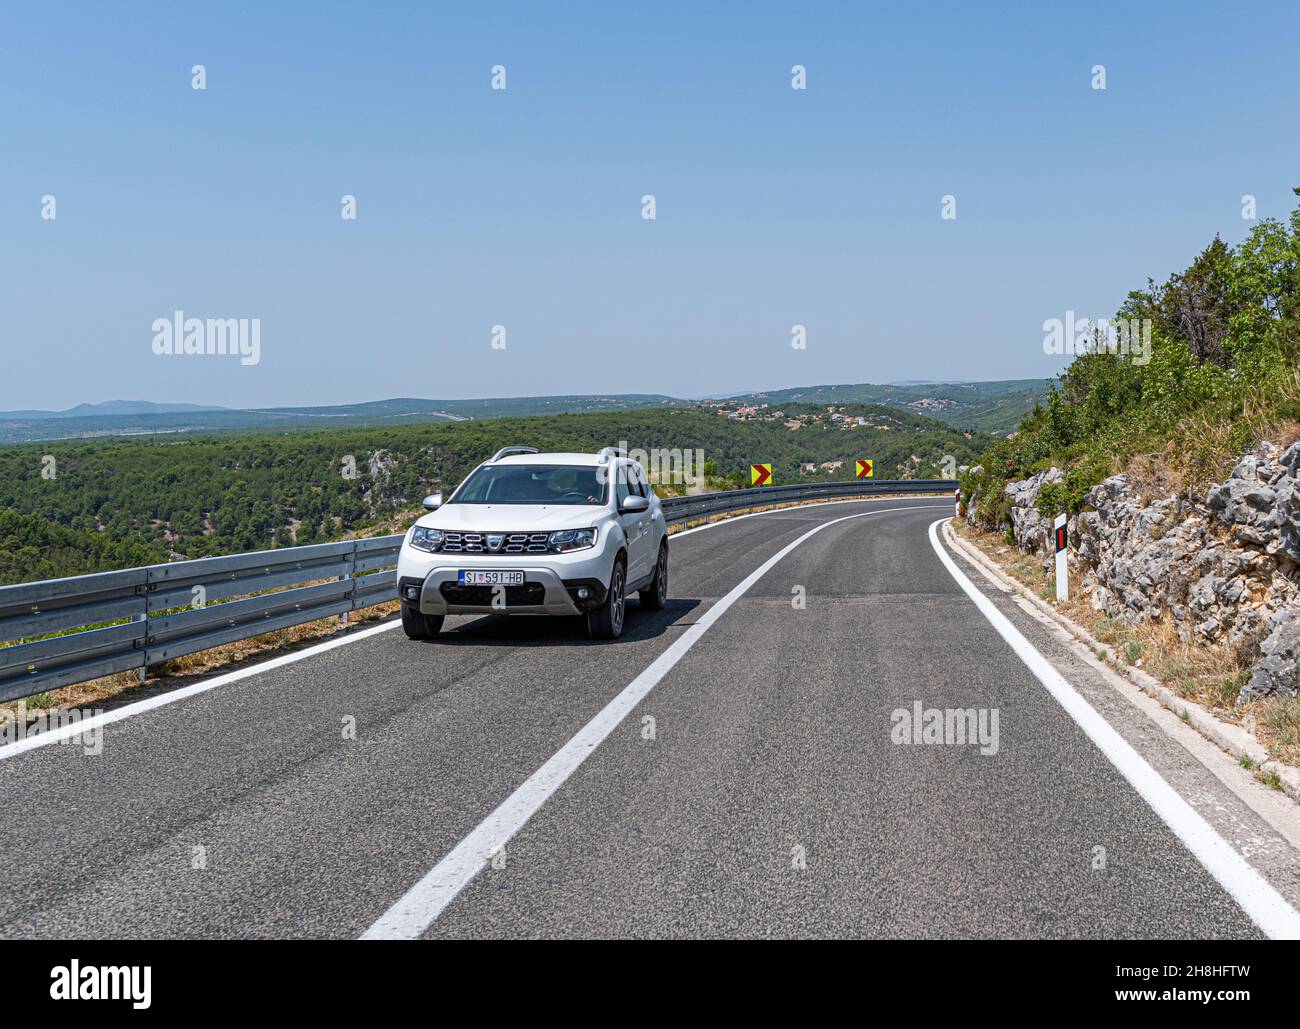 Dacia duster car on the highway In Skradin, Croatia. Stock Photo